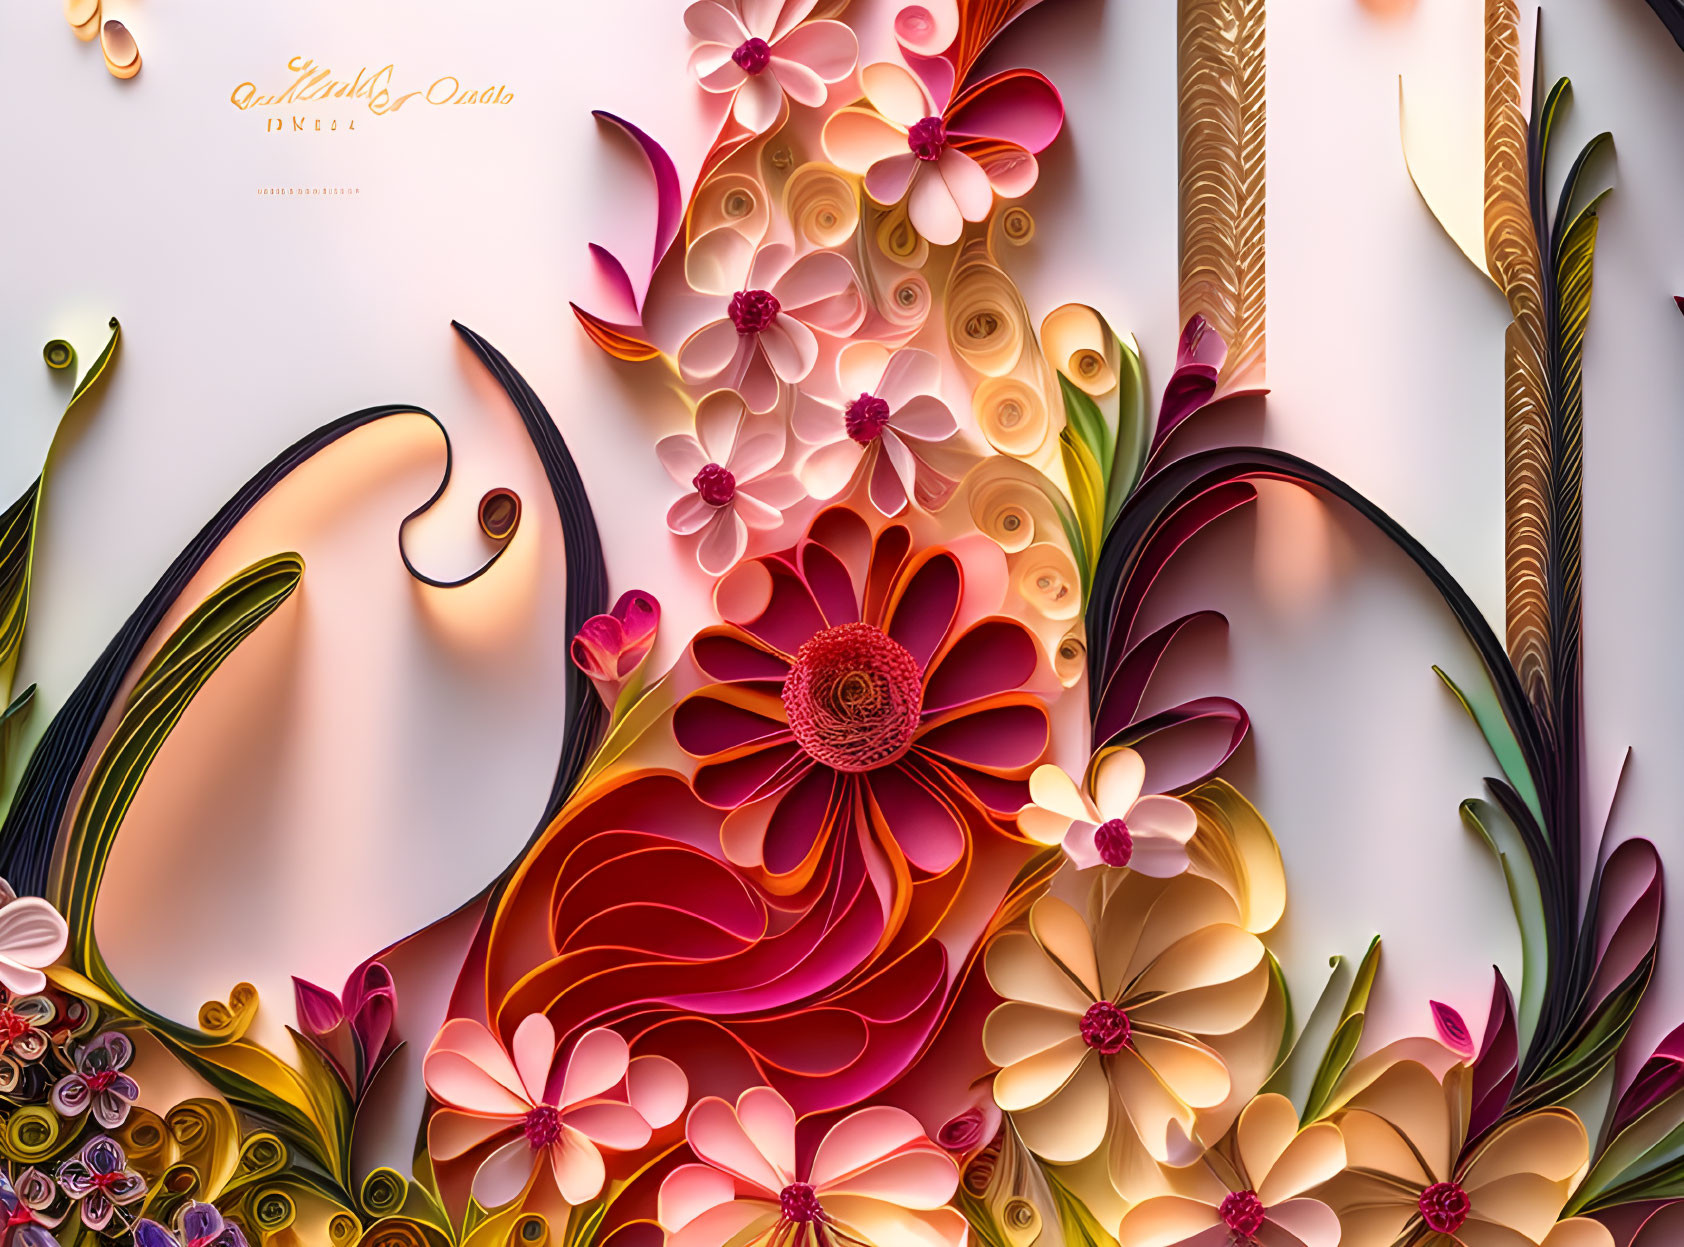 Vibrant Quilled Floral Paper Art Designs